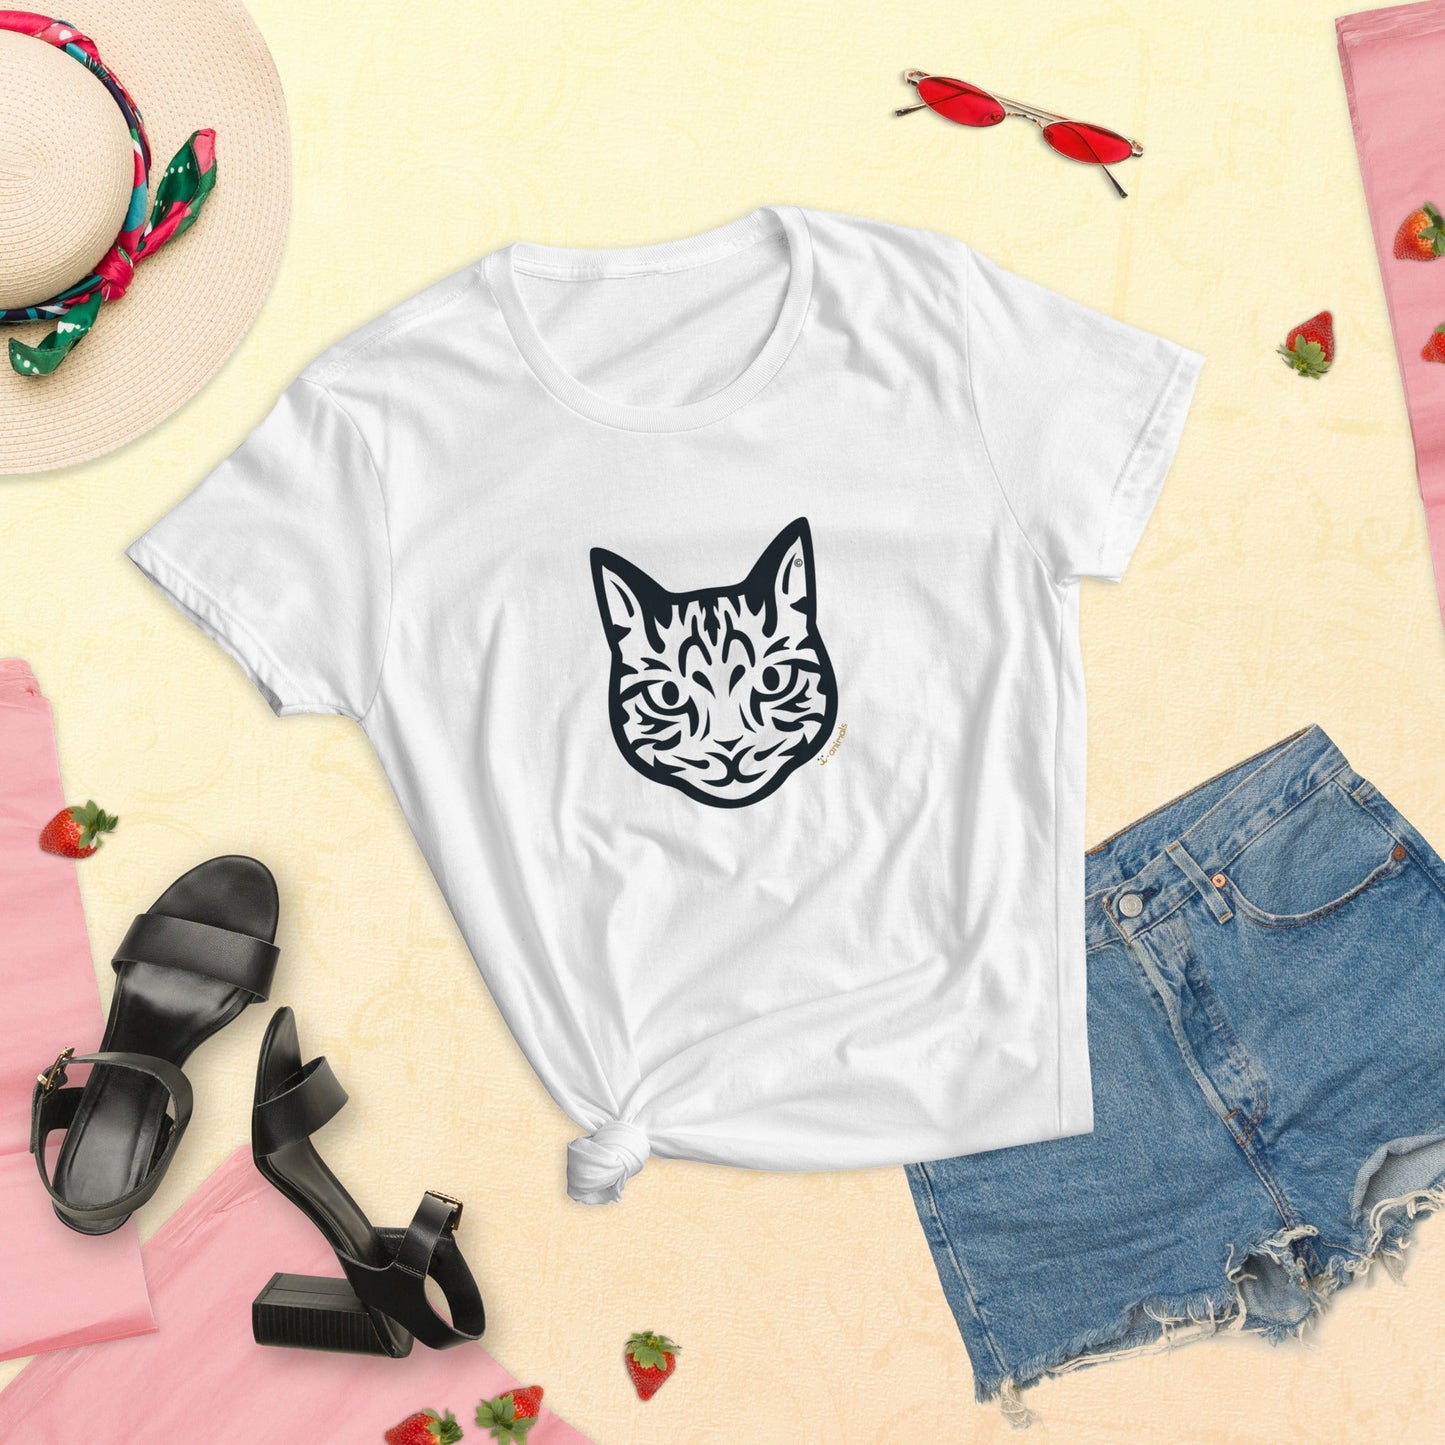 Camiseta feminina de manga curta - Gato Tigrado - Tribal - Cores Claras i-animals